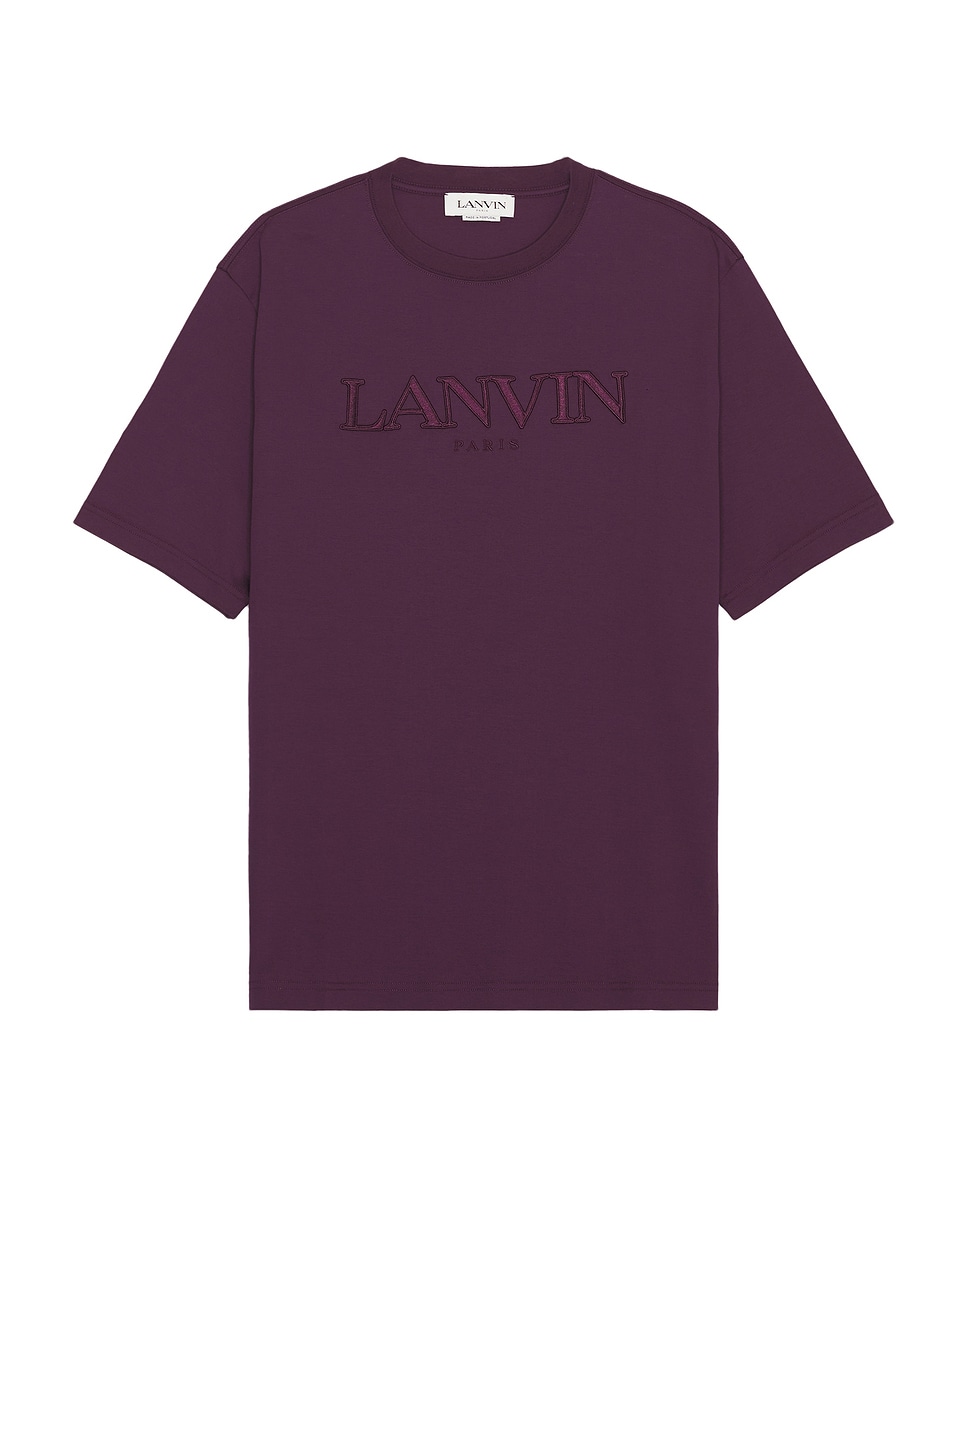 Image 1 of Lanvin Paris Classic T-shirt in Cassis